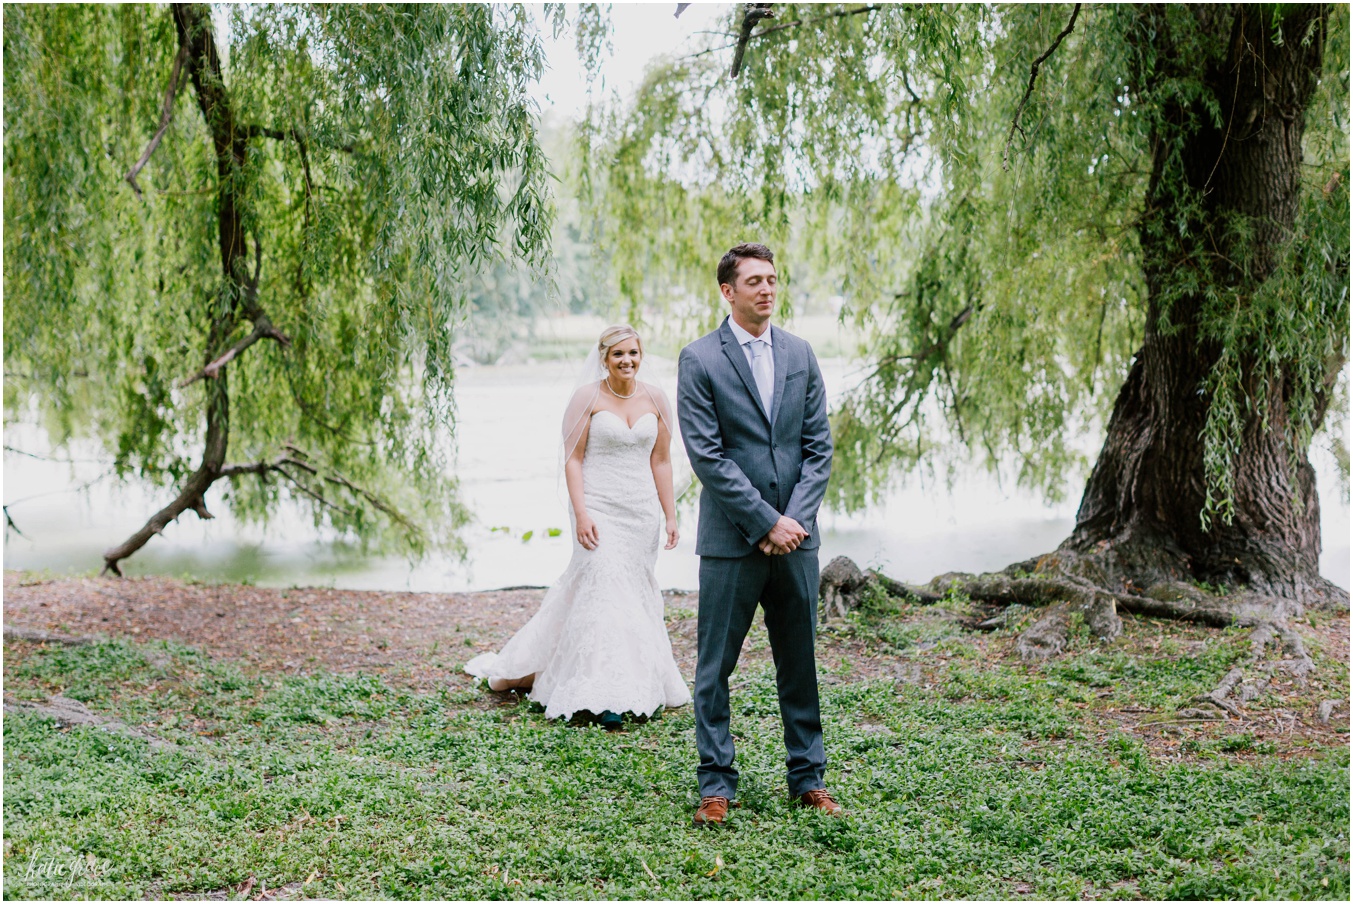 Katie Grace Photography, Riverside Park, Summer Wedding, Goei Center, Gray wedding